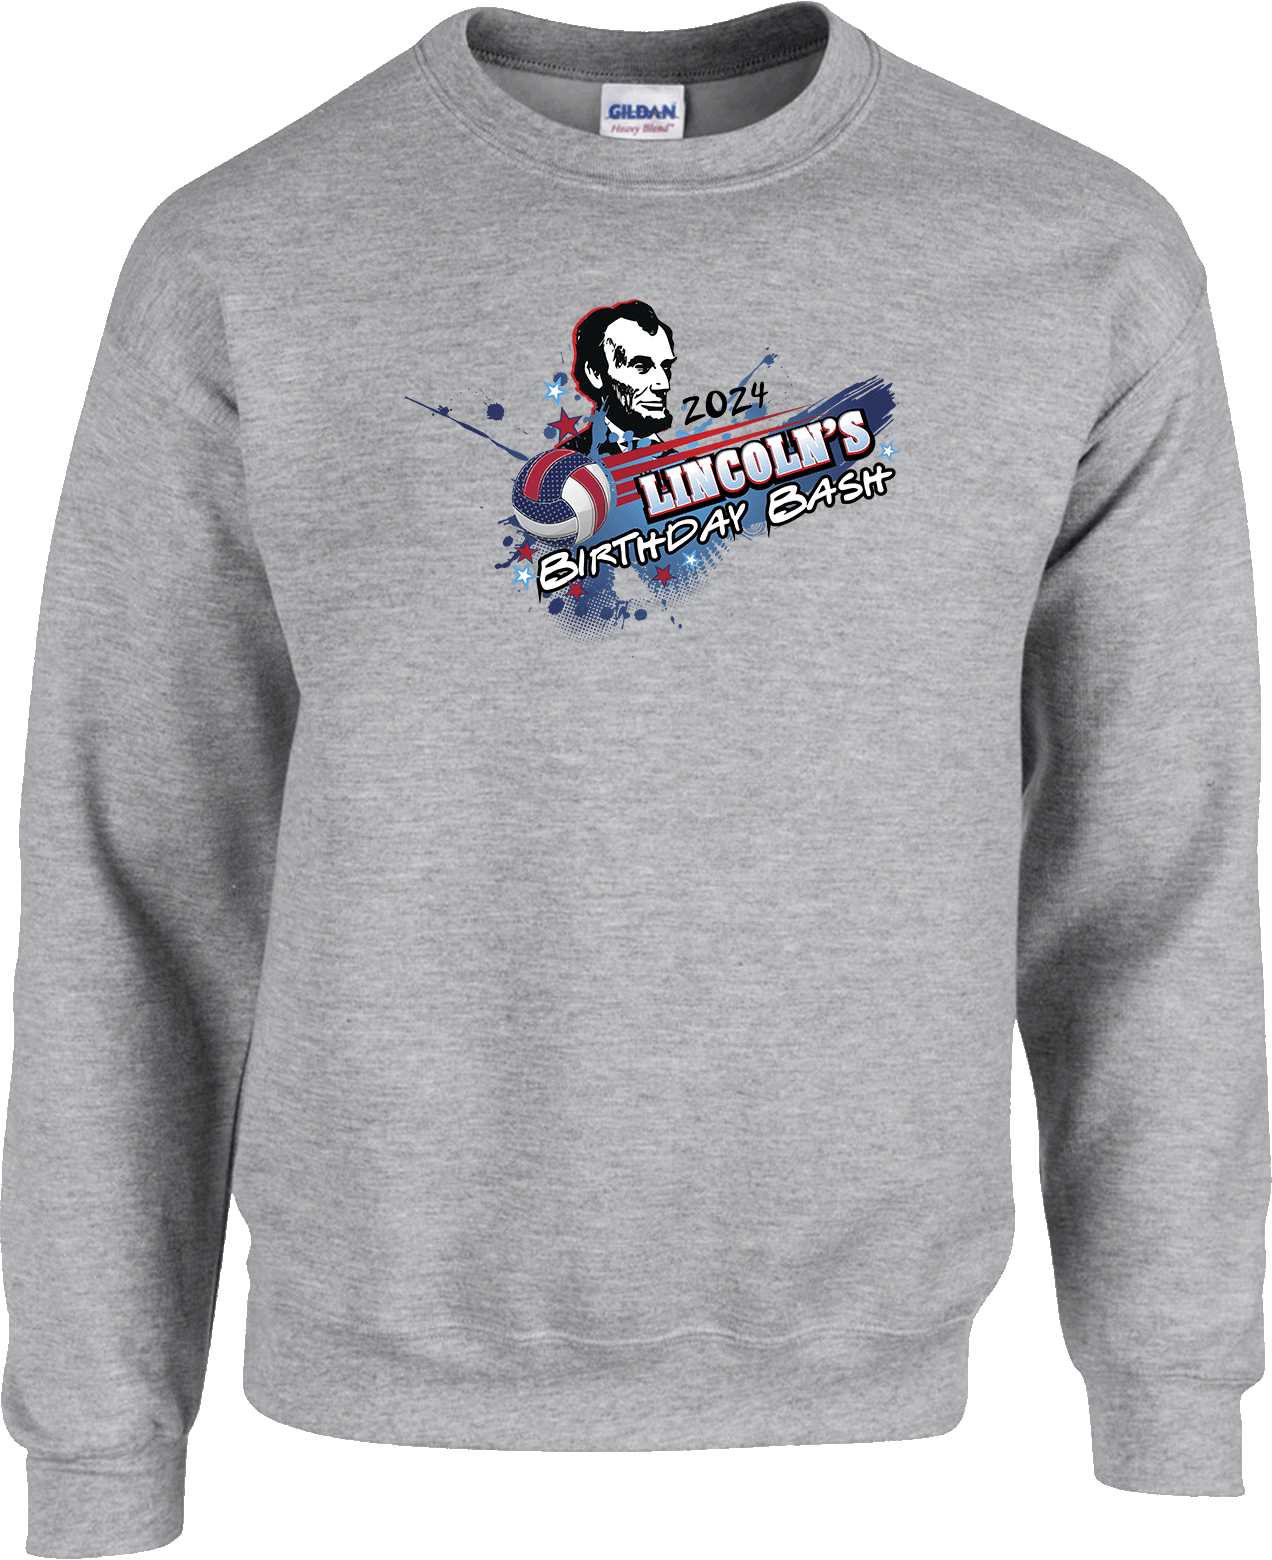 Crew Sweatershirt - 2024 Lincoln's Birthday Bash